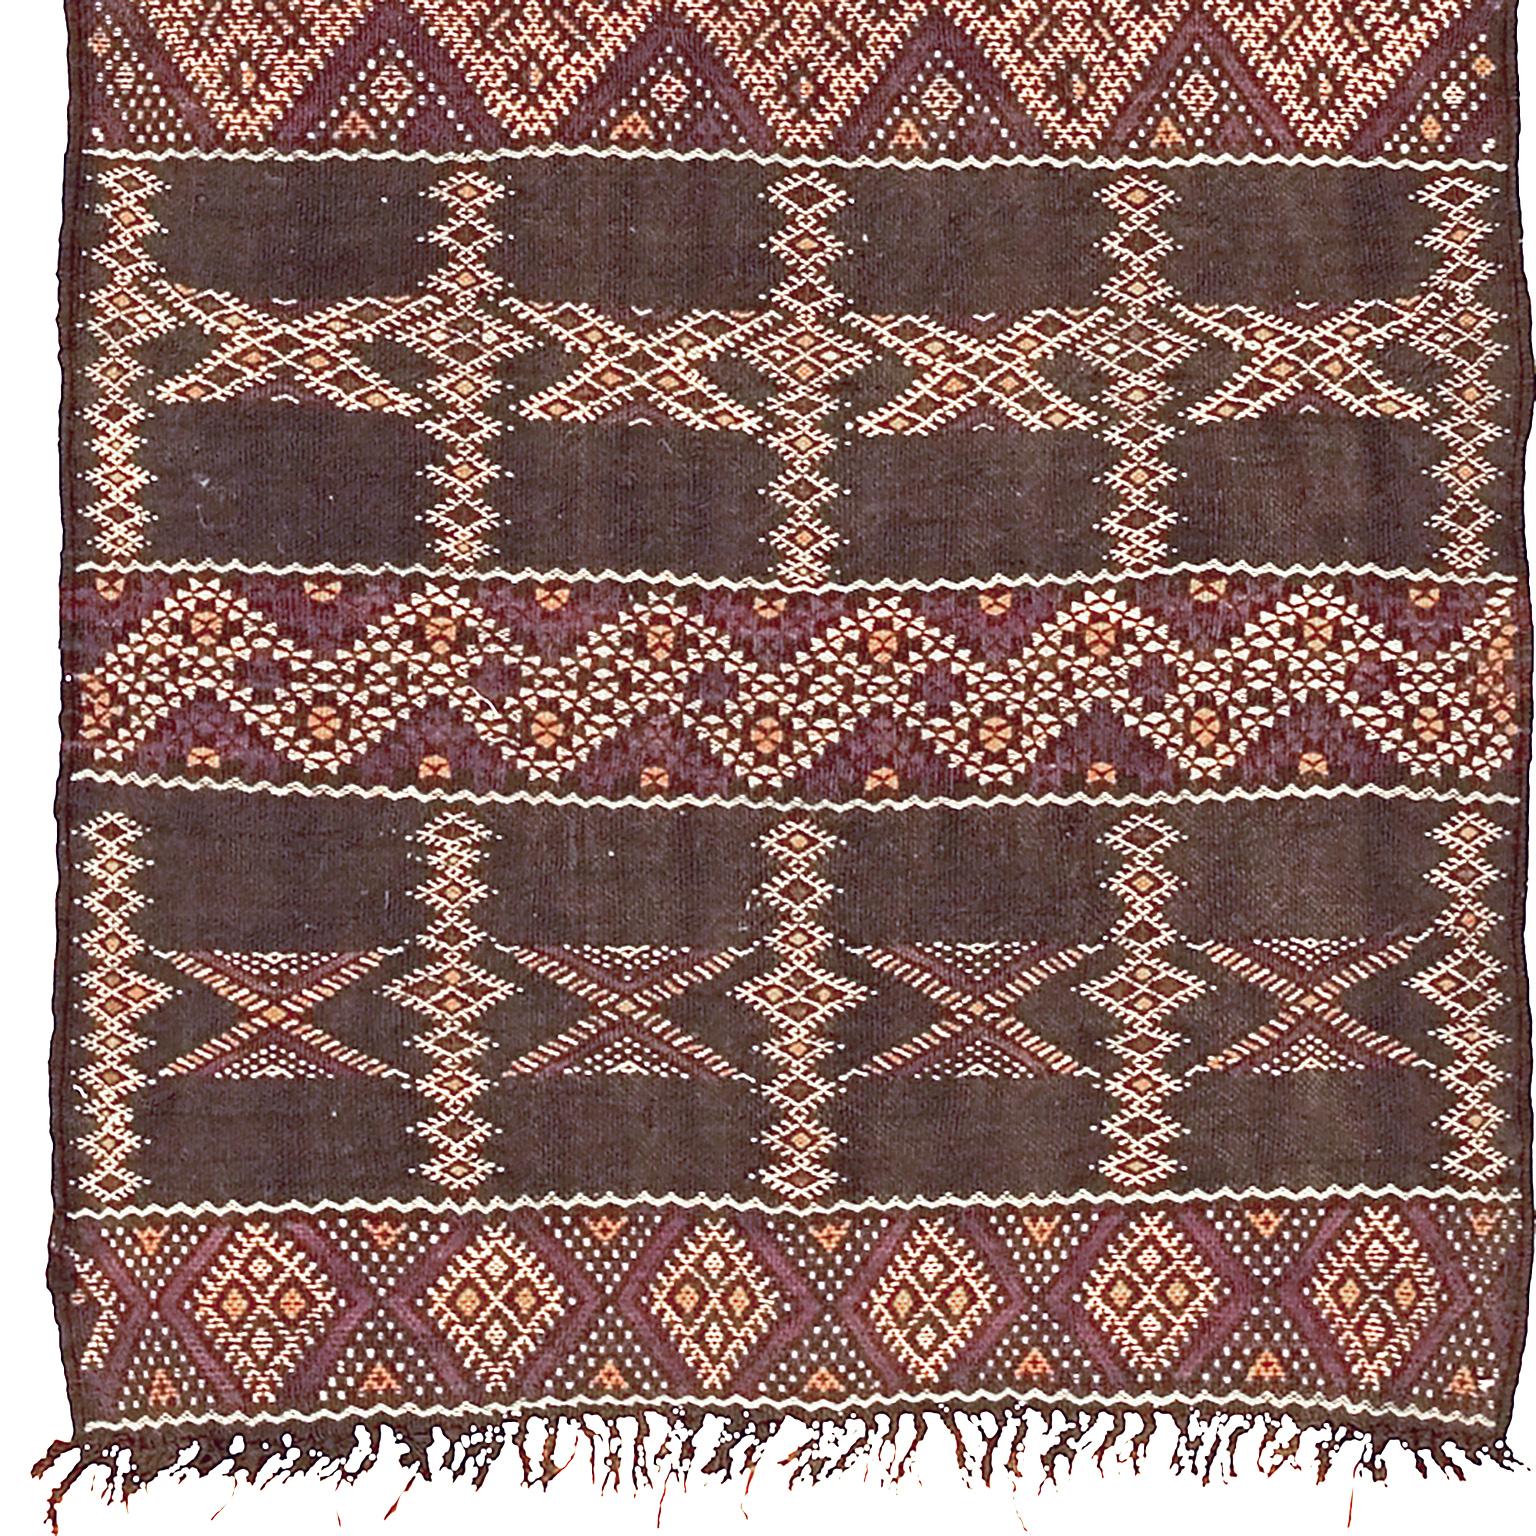 Moroccan zaiane handwoven carpet/runner.
   